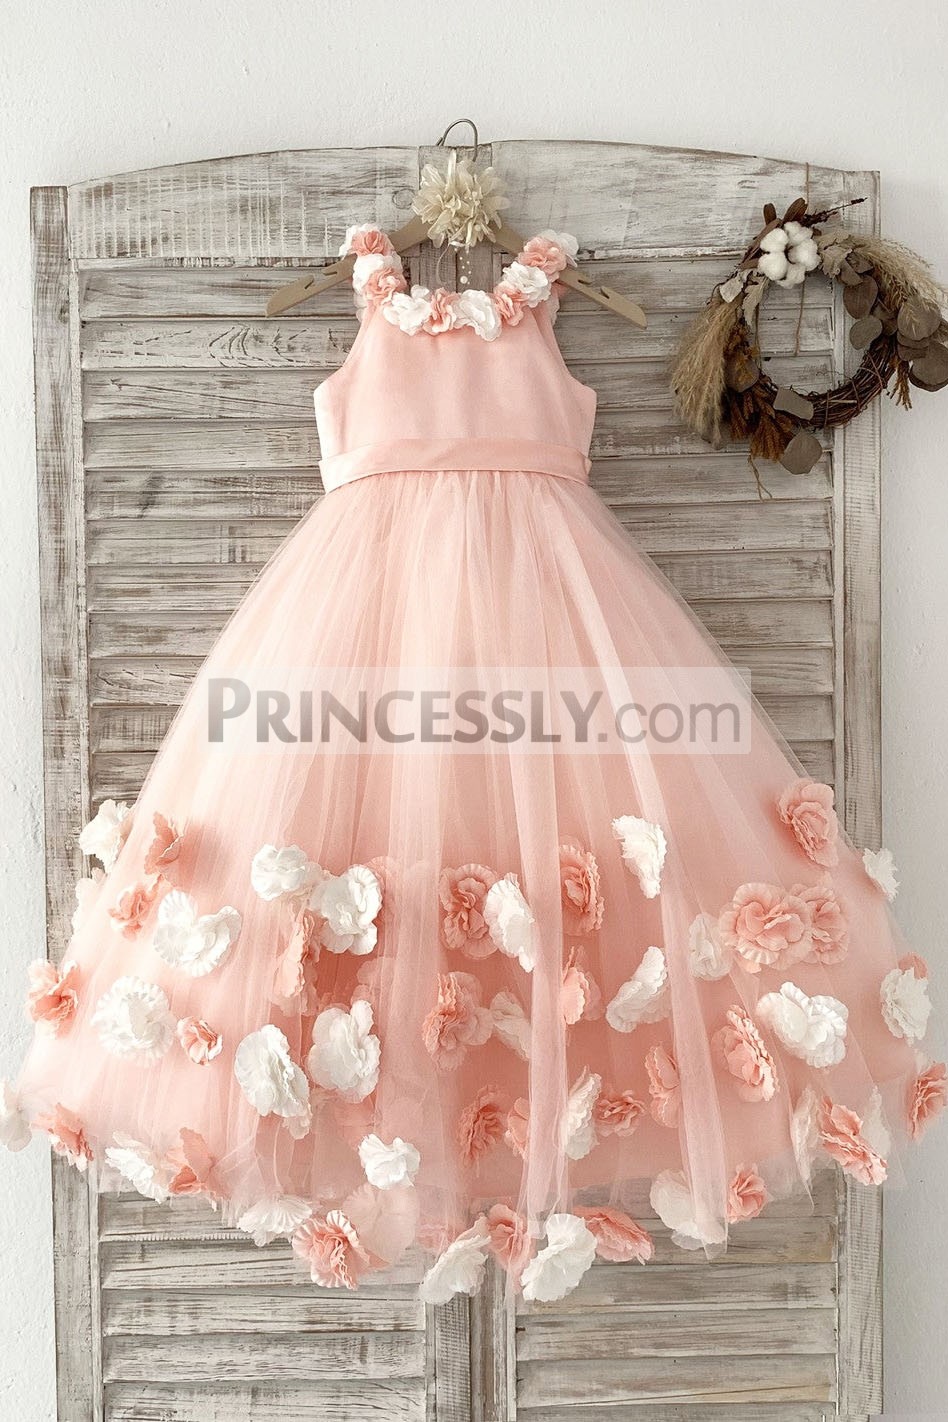 Princessly.com-K1004170-Pink 3D Flowers Wedding Flower Girl Dress Kids Party Dress-37